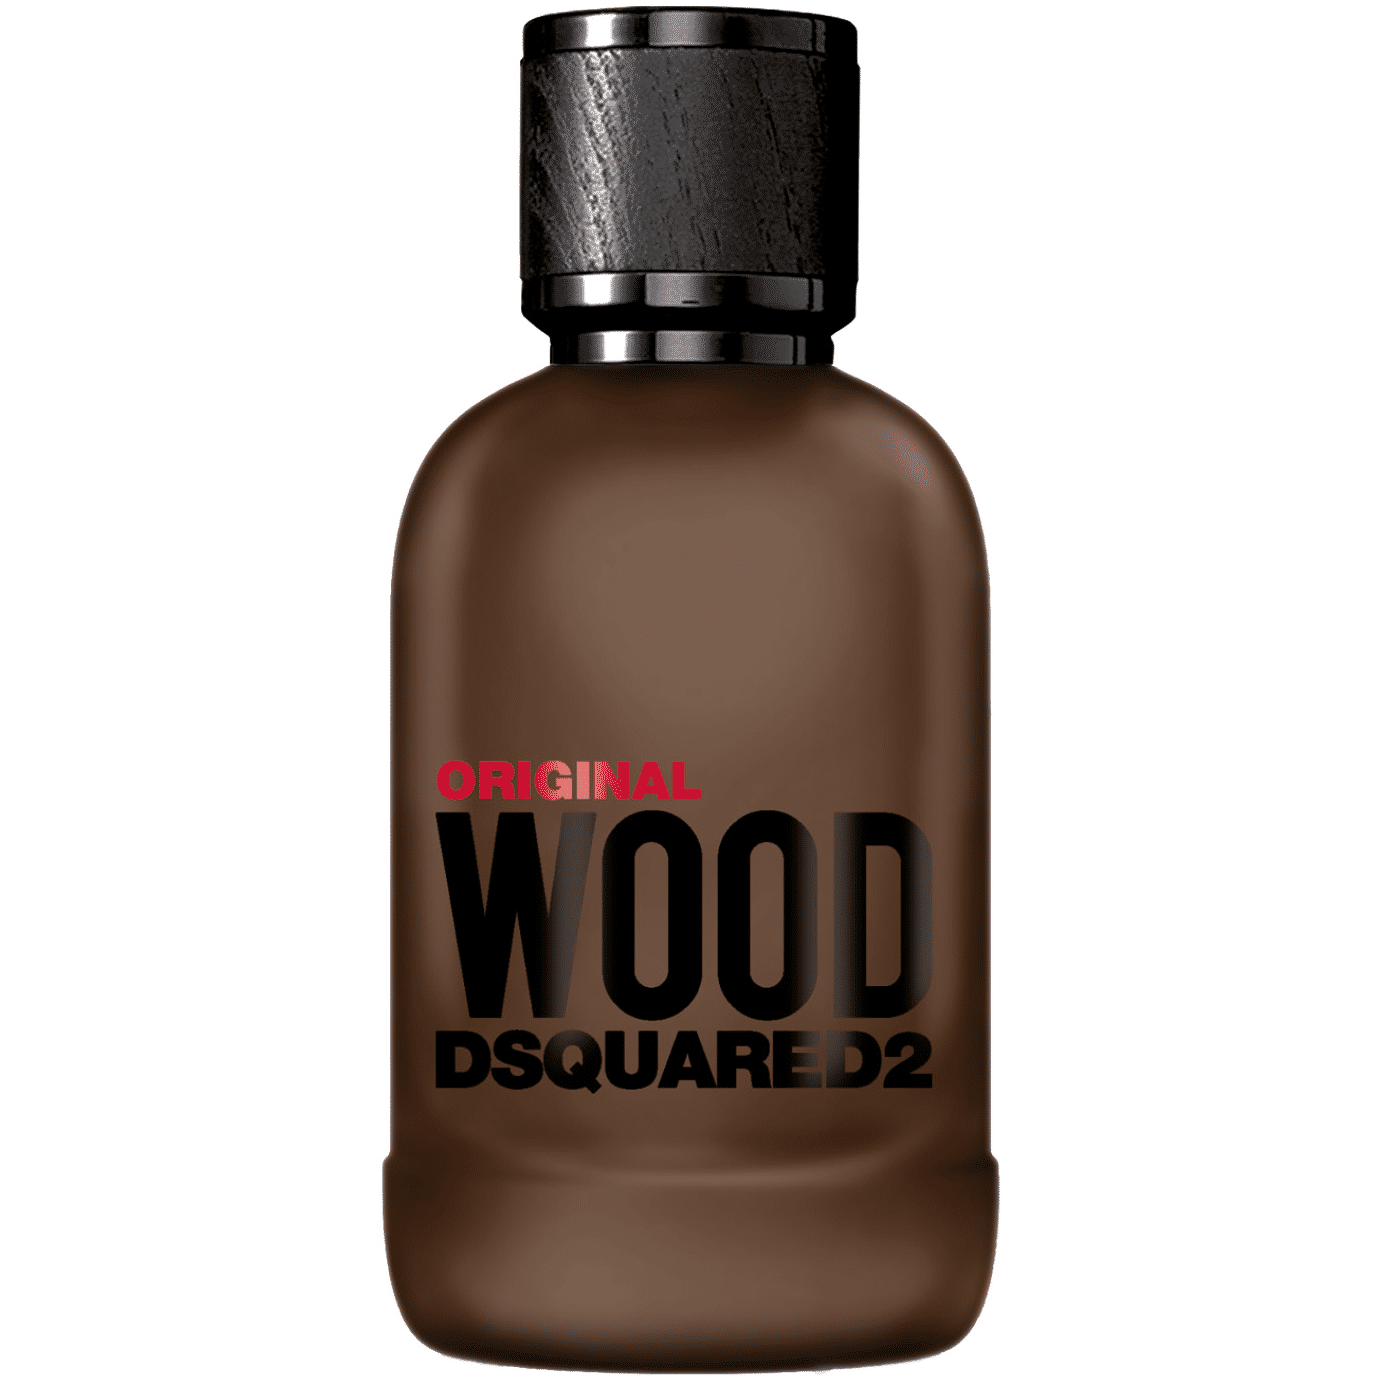 Dsquared2 Original Wood Eau de parfum spray 30 ml